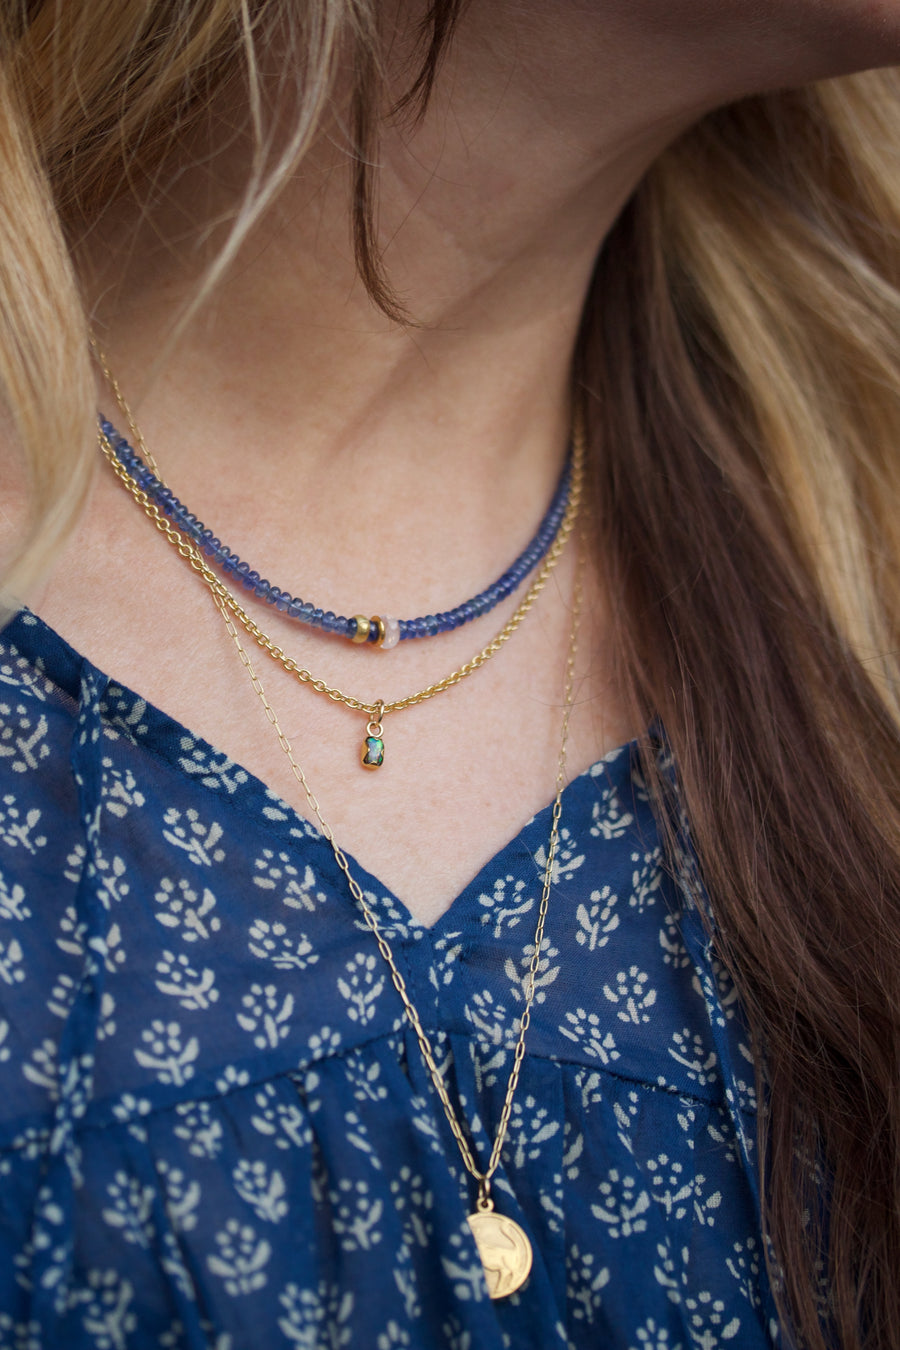 Sapphire, Moonstone & High Karat Gold Necklace